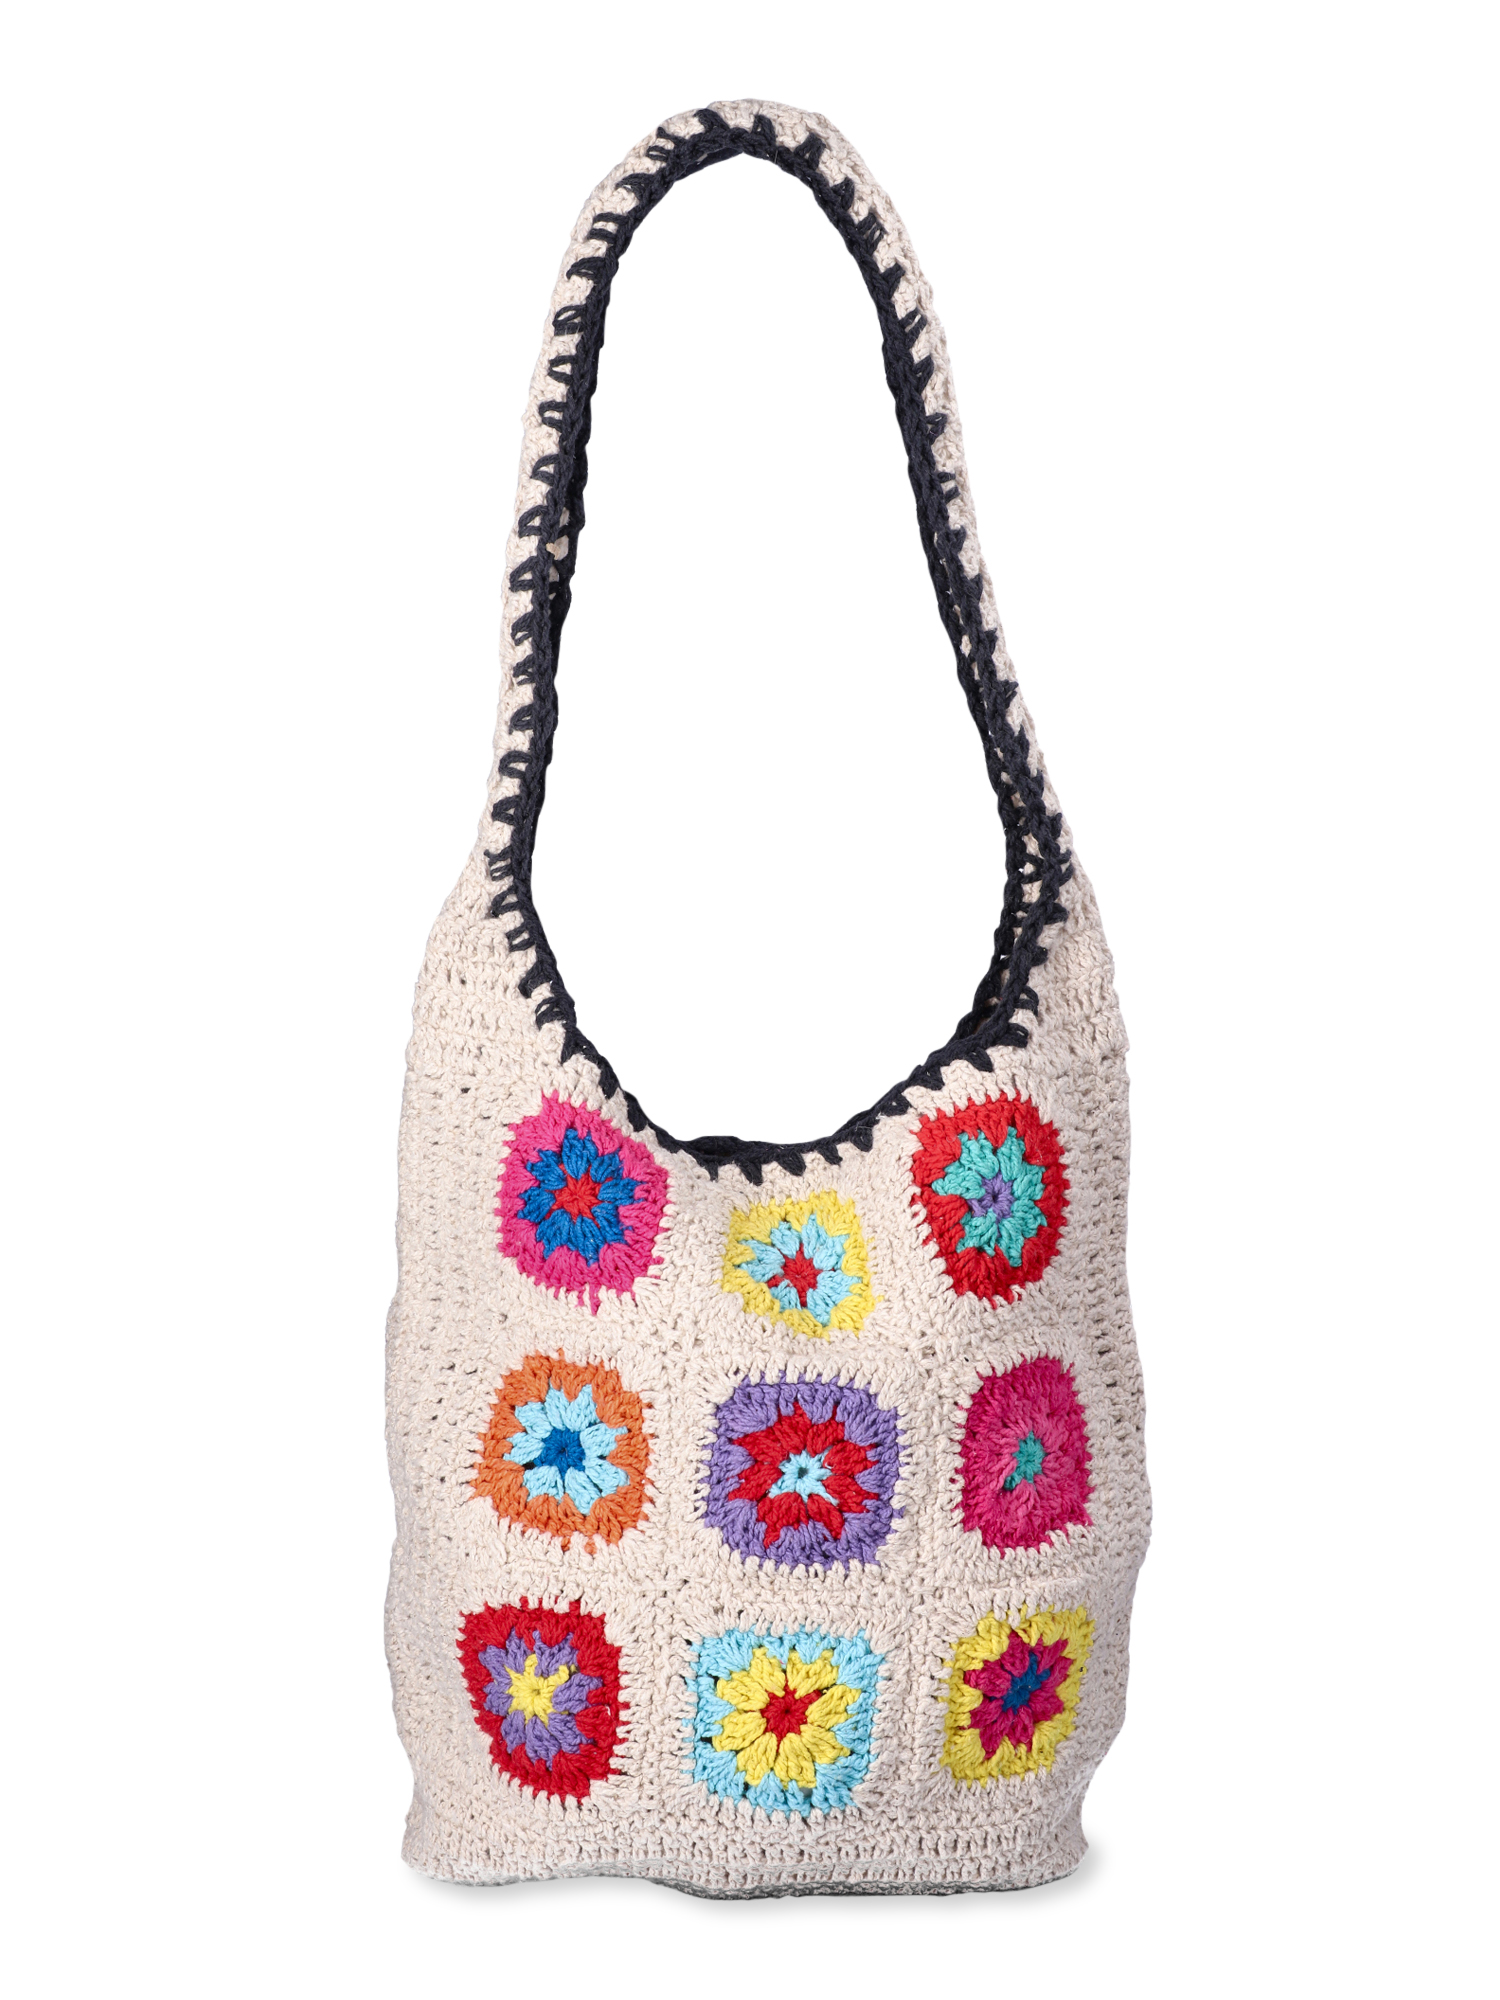 No Boundaries Women's Crochet Festival Hobo Bag, Natural Granny Floral, Size: One size, Multicolor